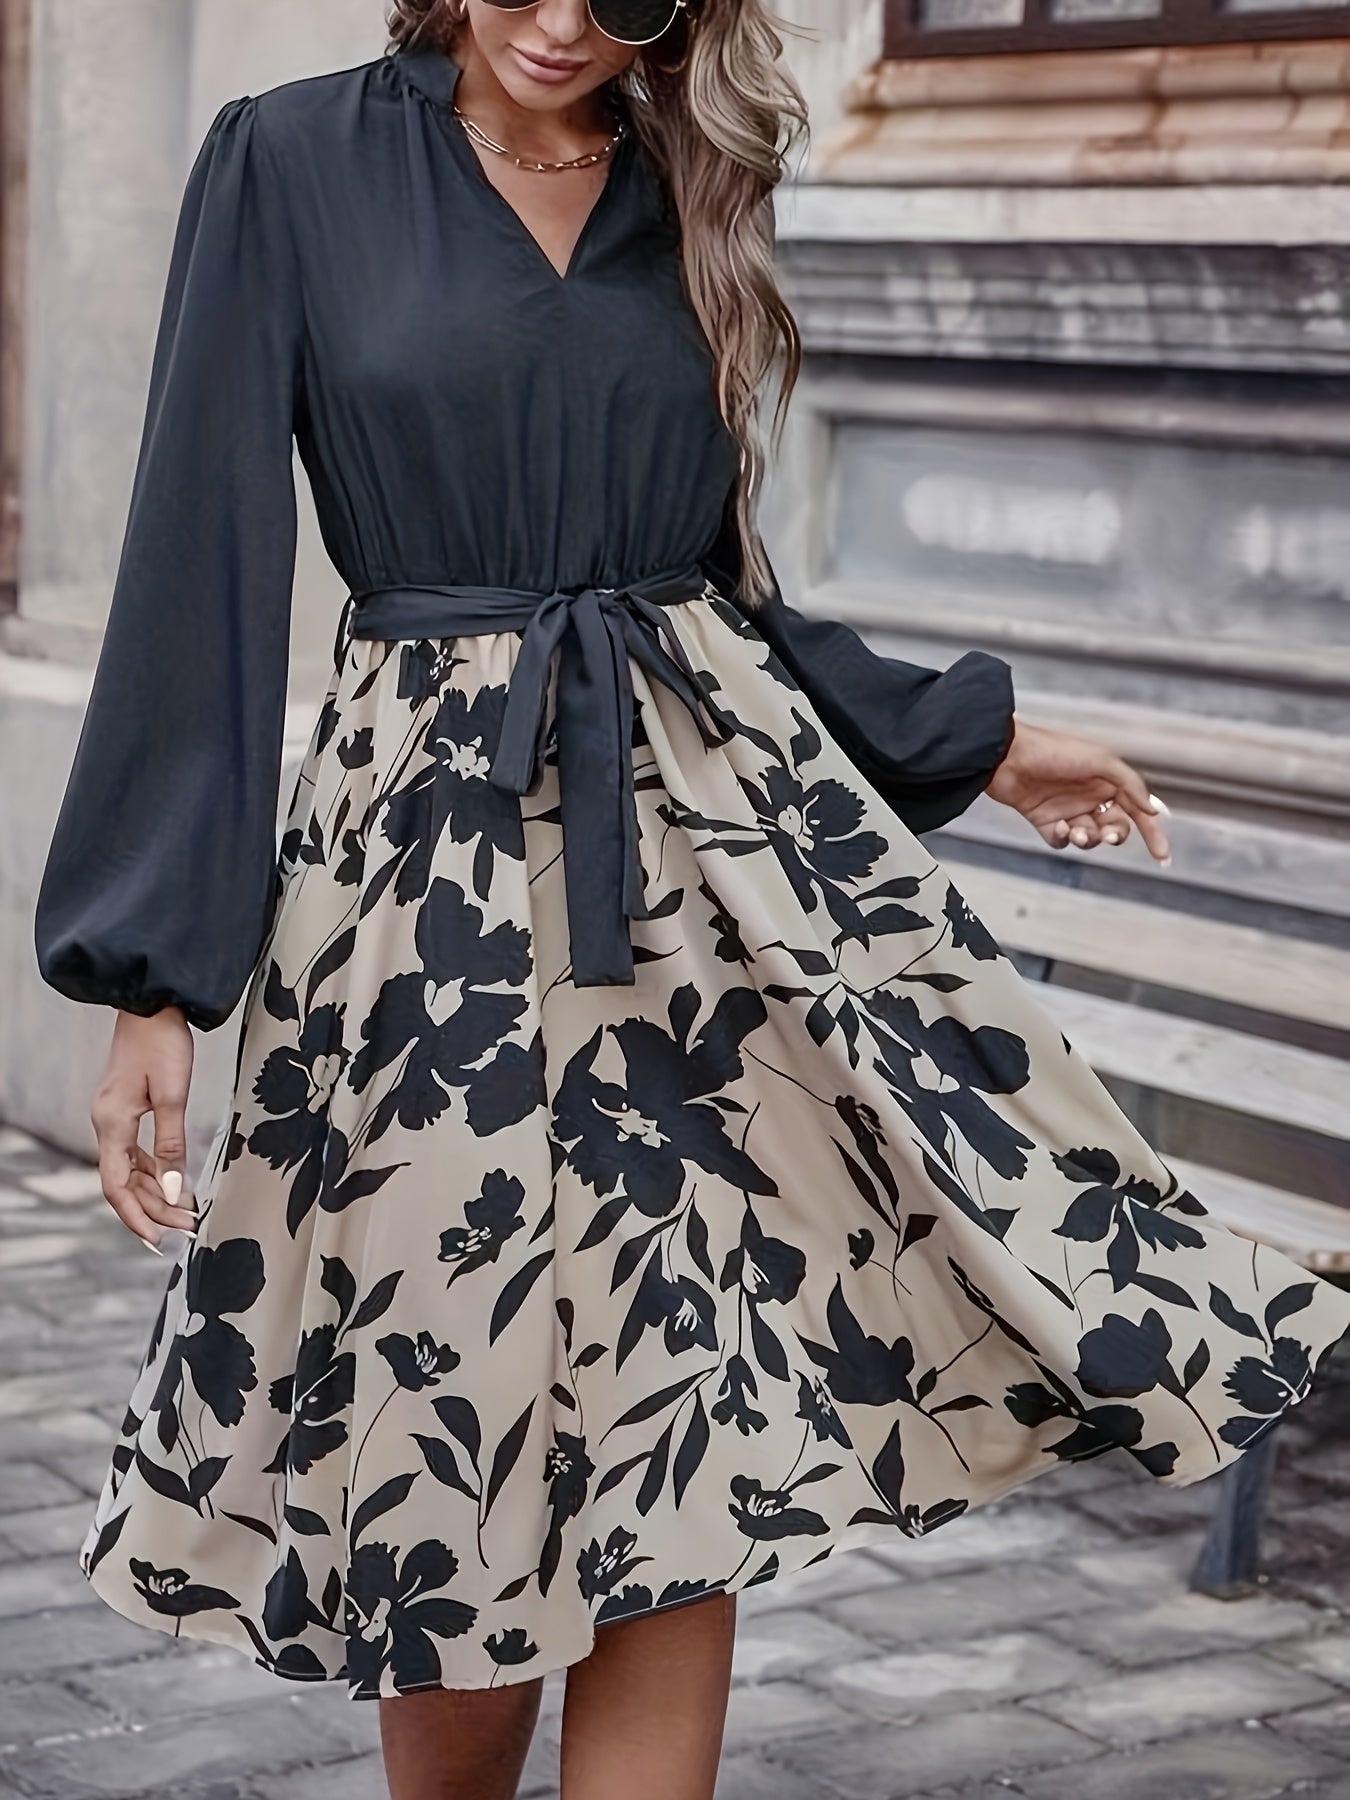 Antmvs Floral Print Splicing Dress, Elegant V Neck Long Sleeve Dress, Women's Clothing